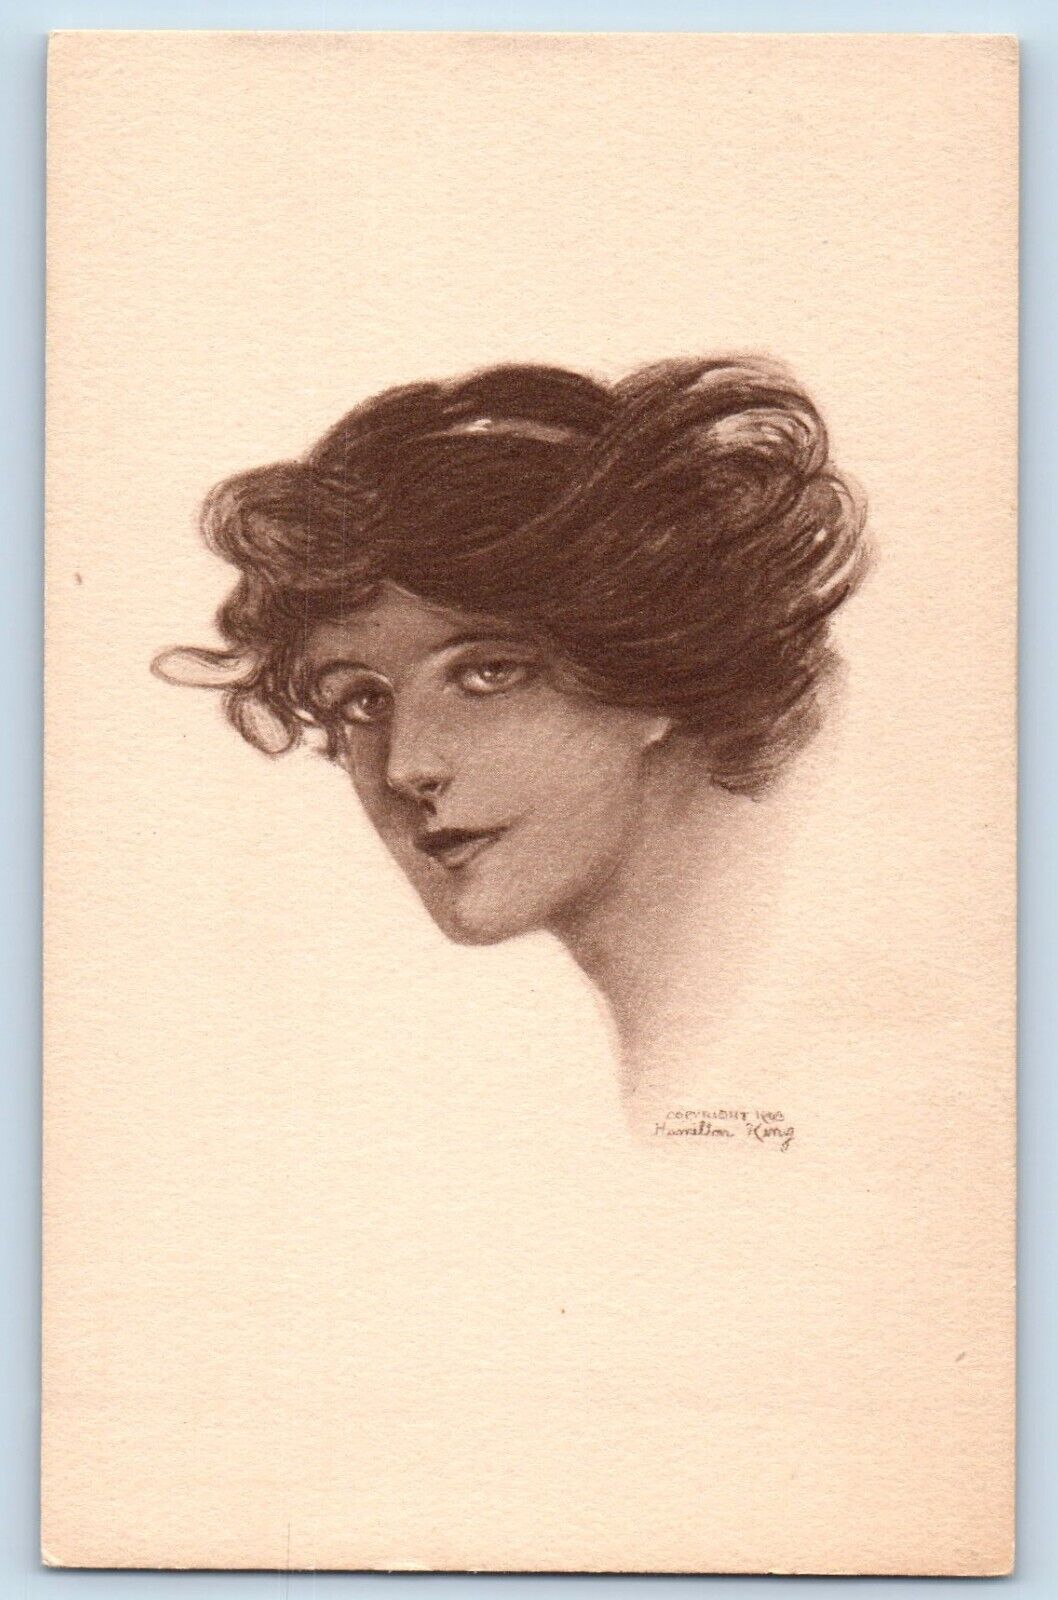 Hamilton King Artist Signed Postcard Pretty Woman Curly Hair c1910's Antique